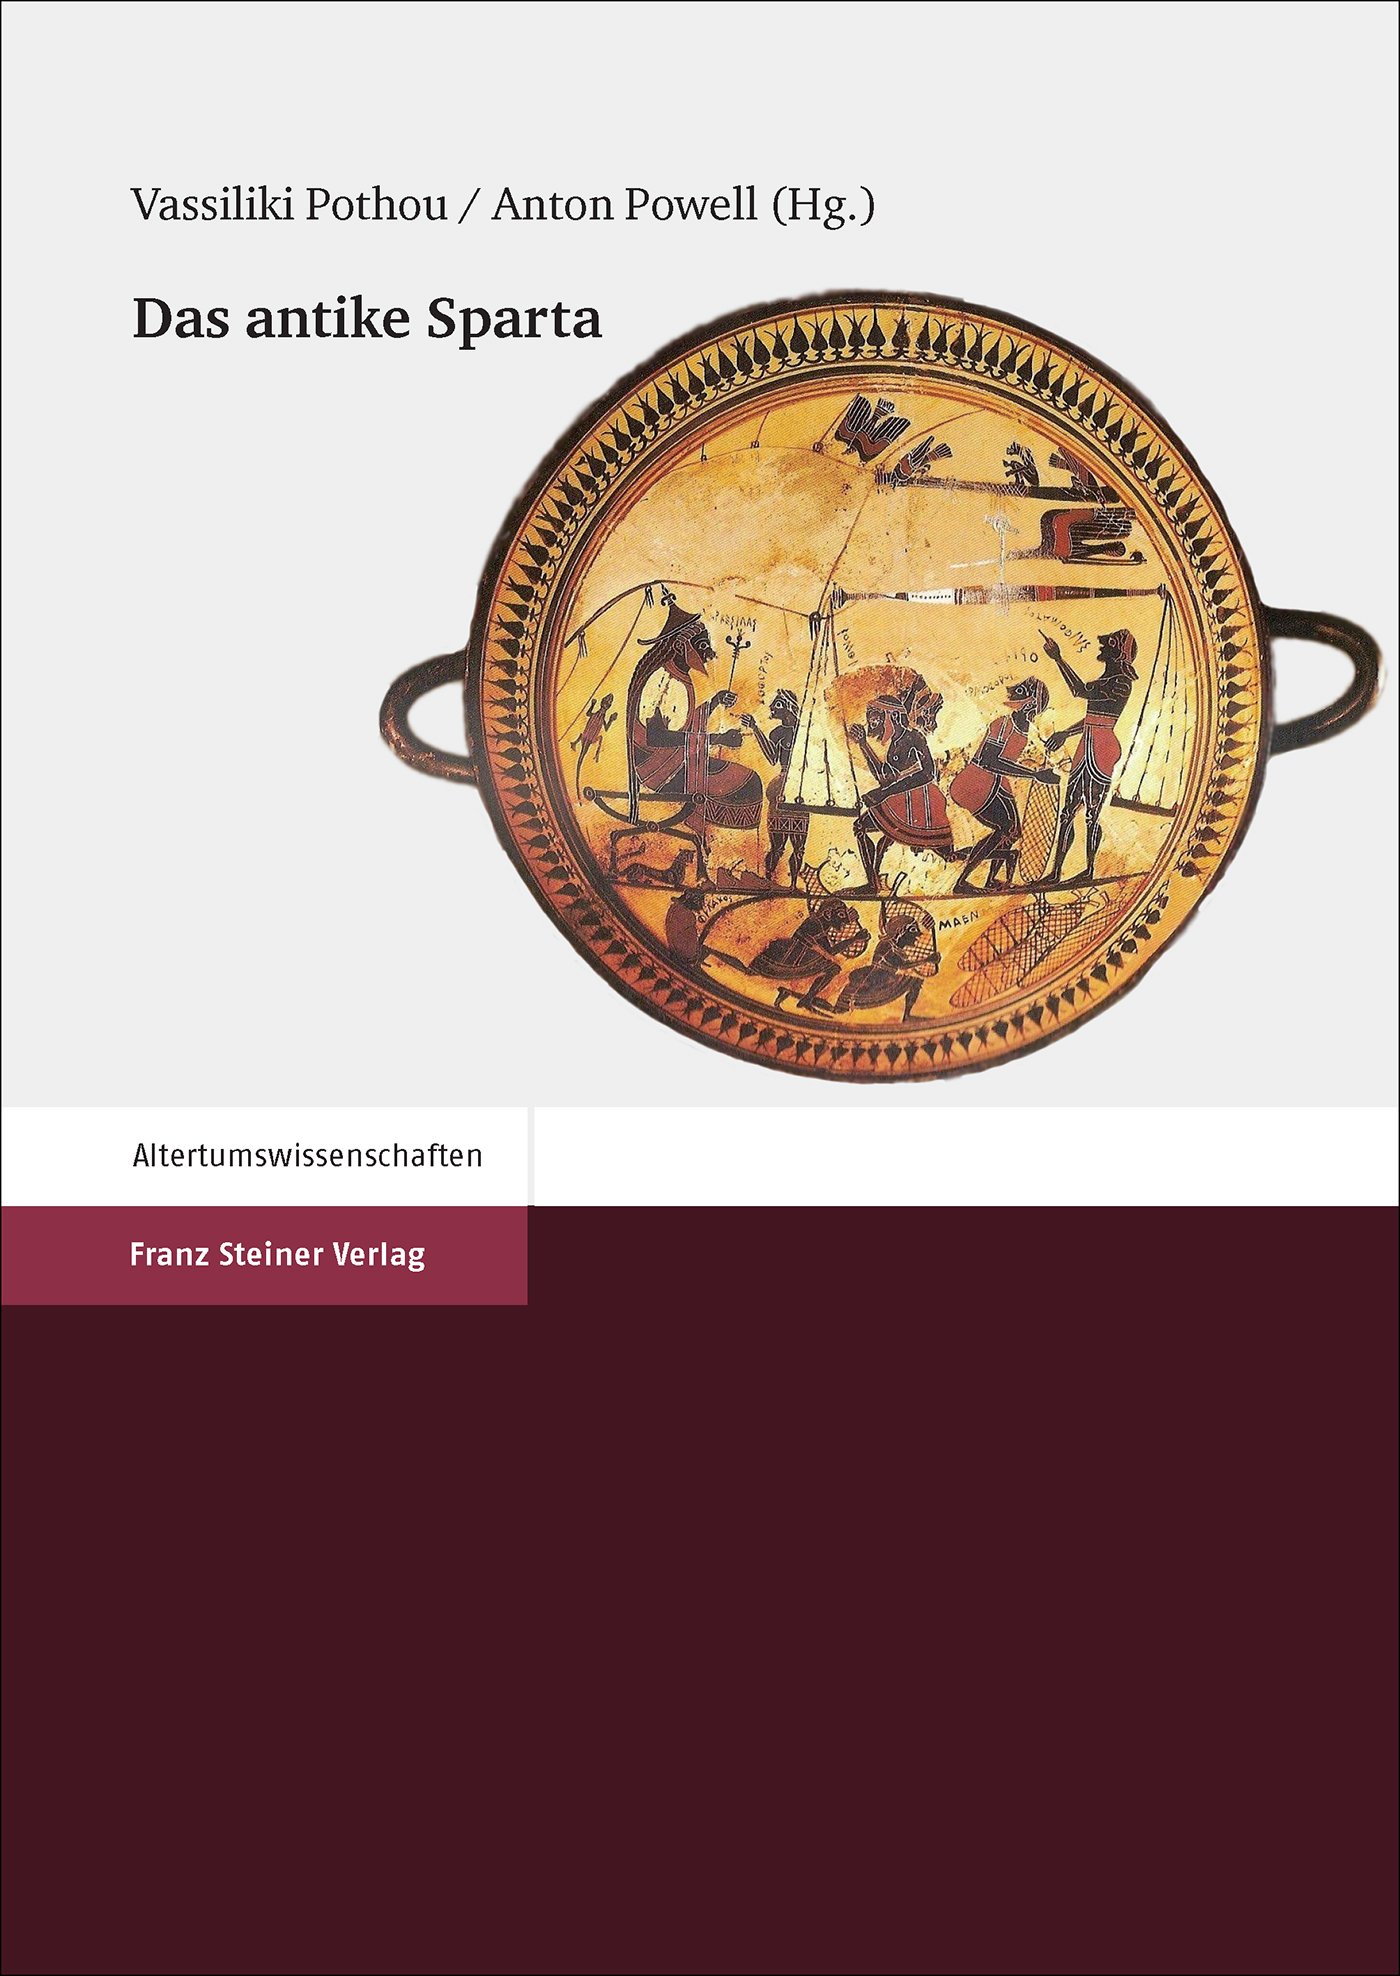 Das antike Sparta